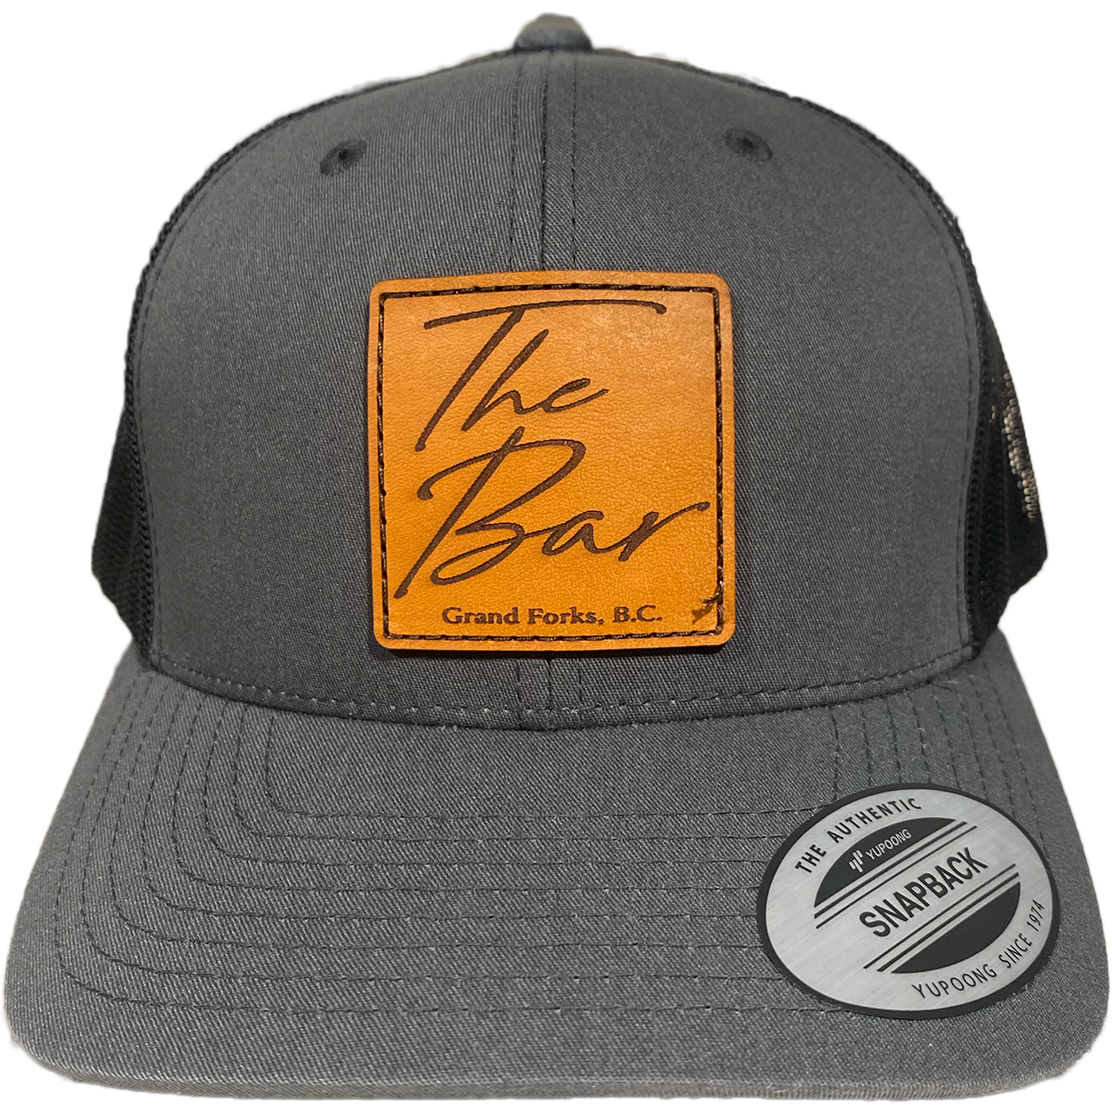 "The Bar" Hats